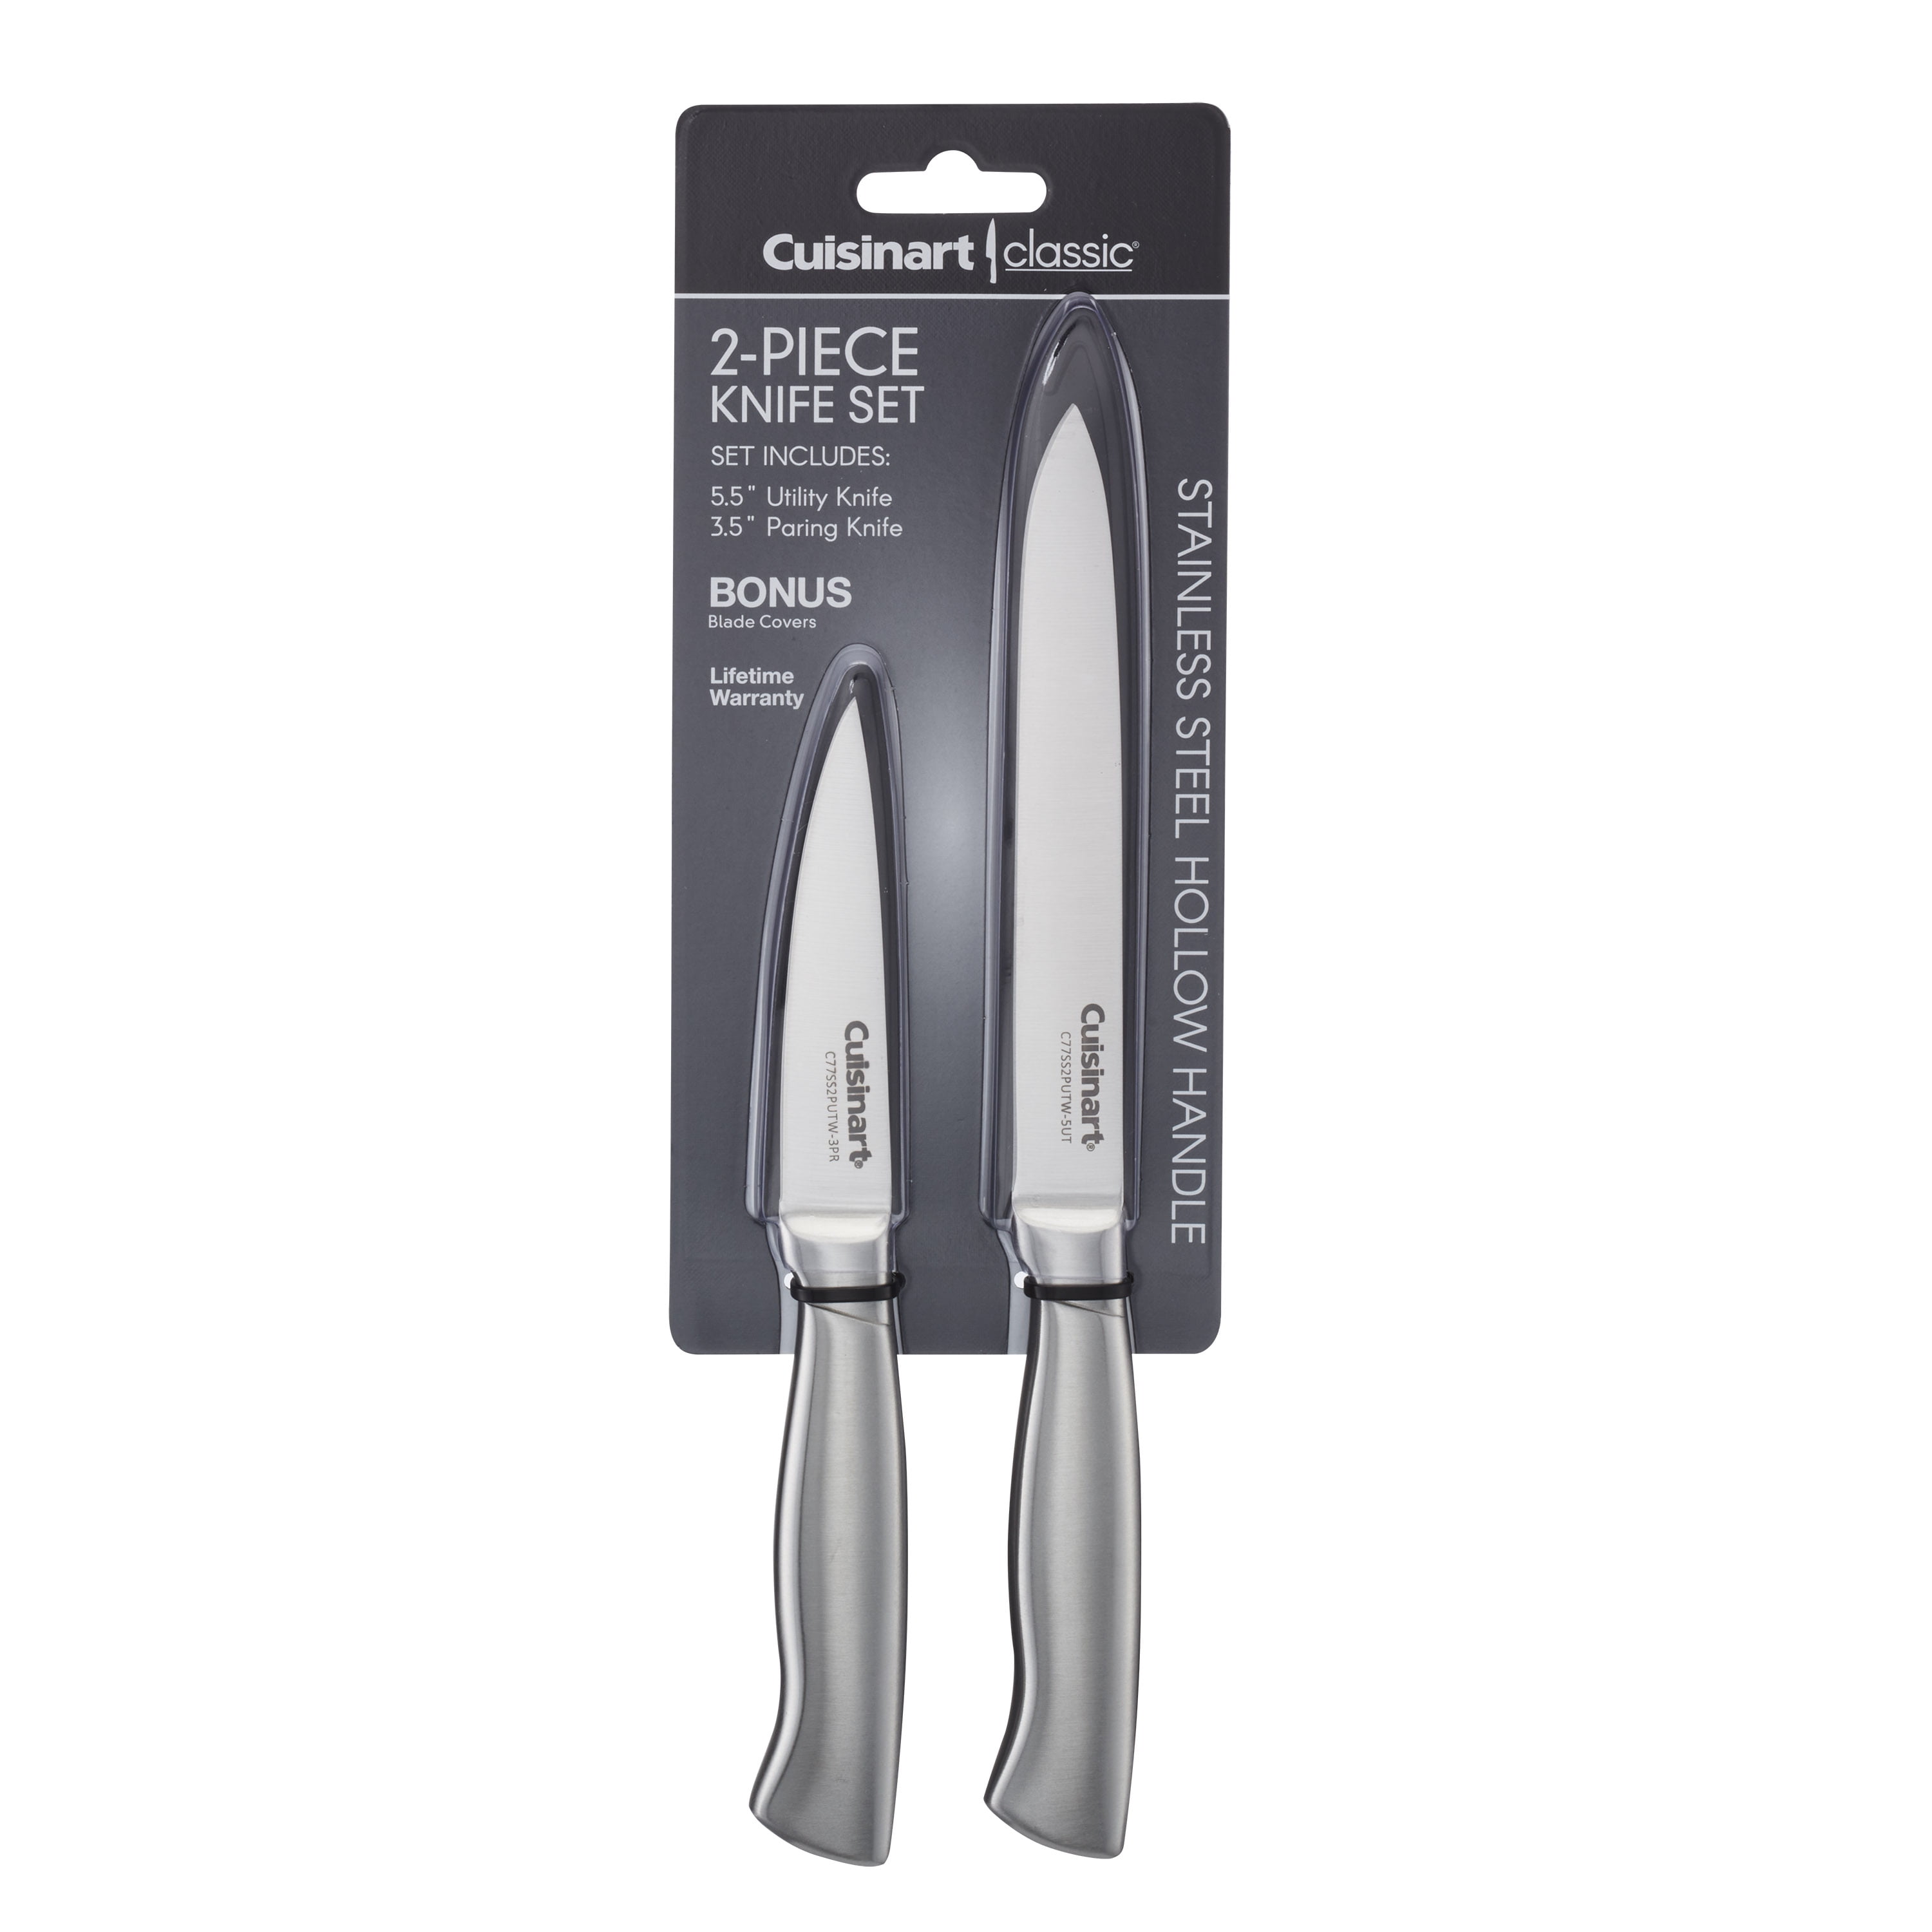 Cuisinart Stainless Steel 22-Piece Cutlery Set, C77ss-22pks